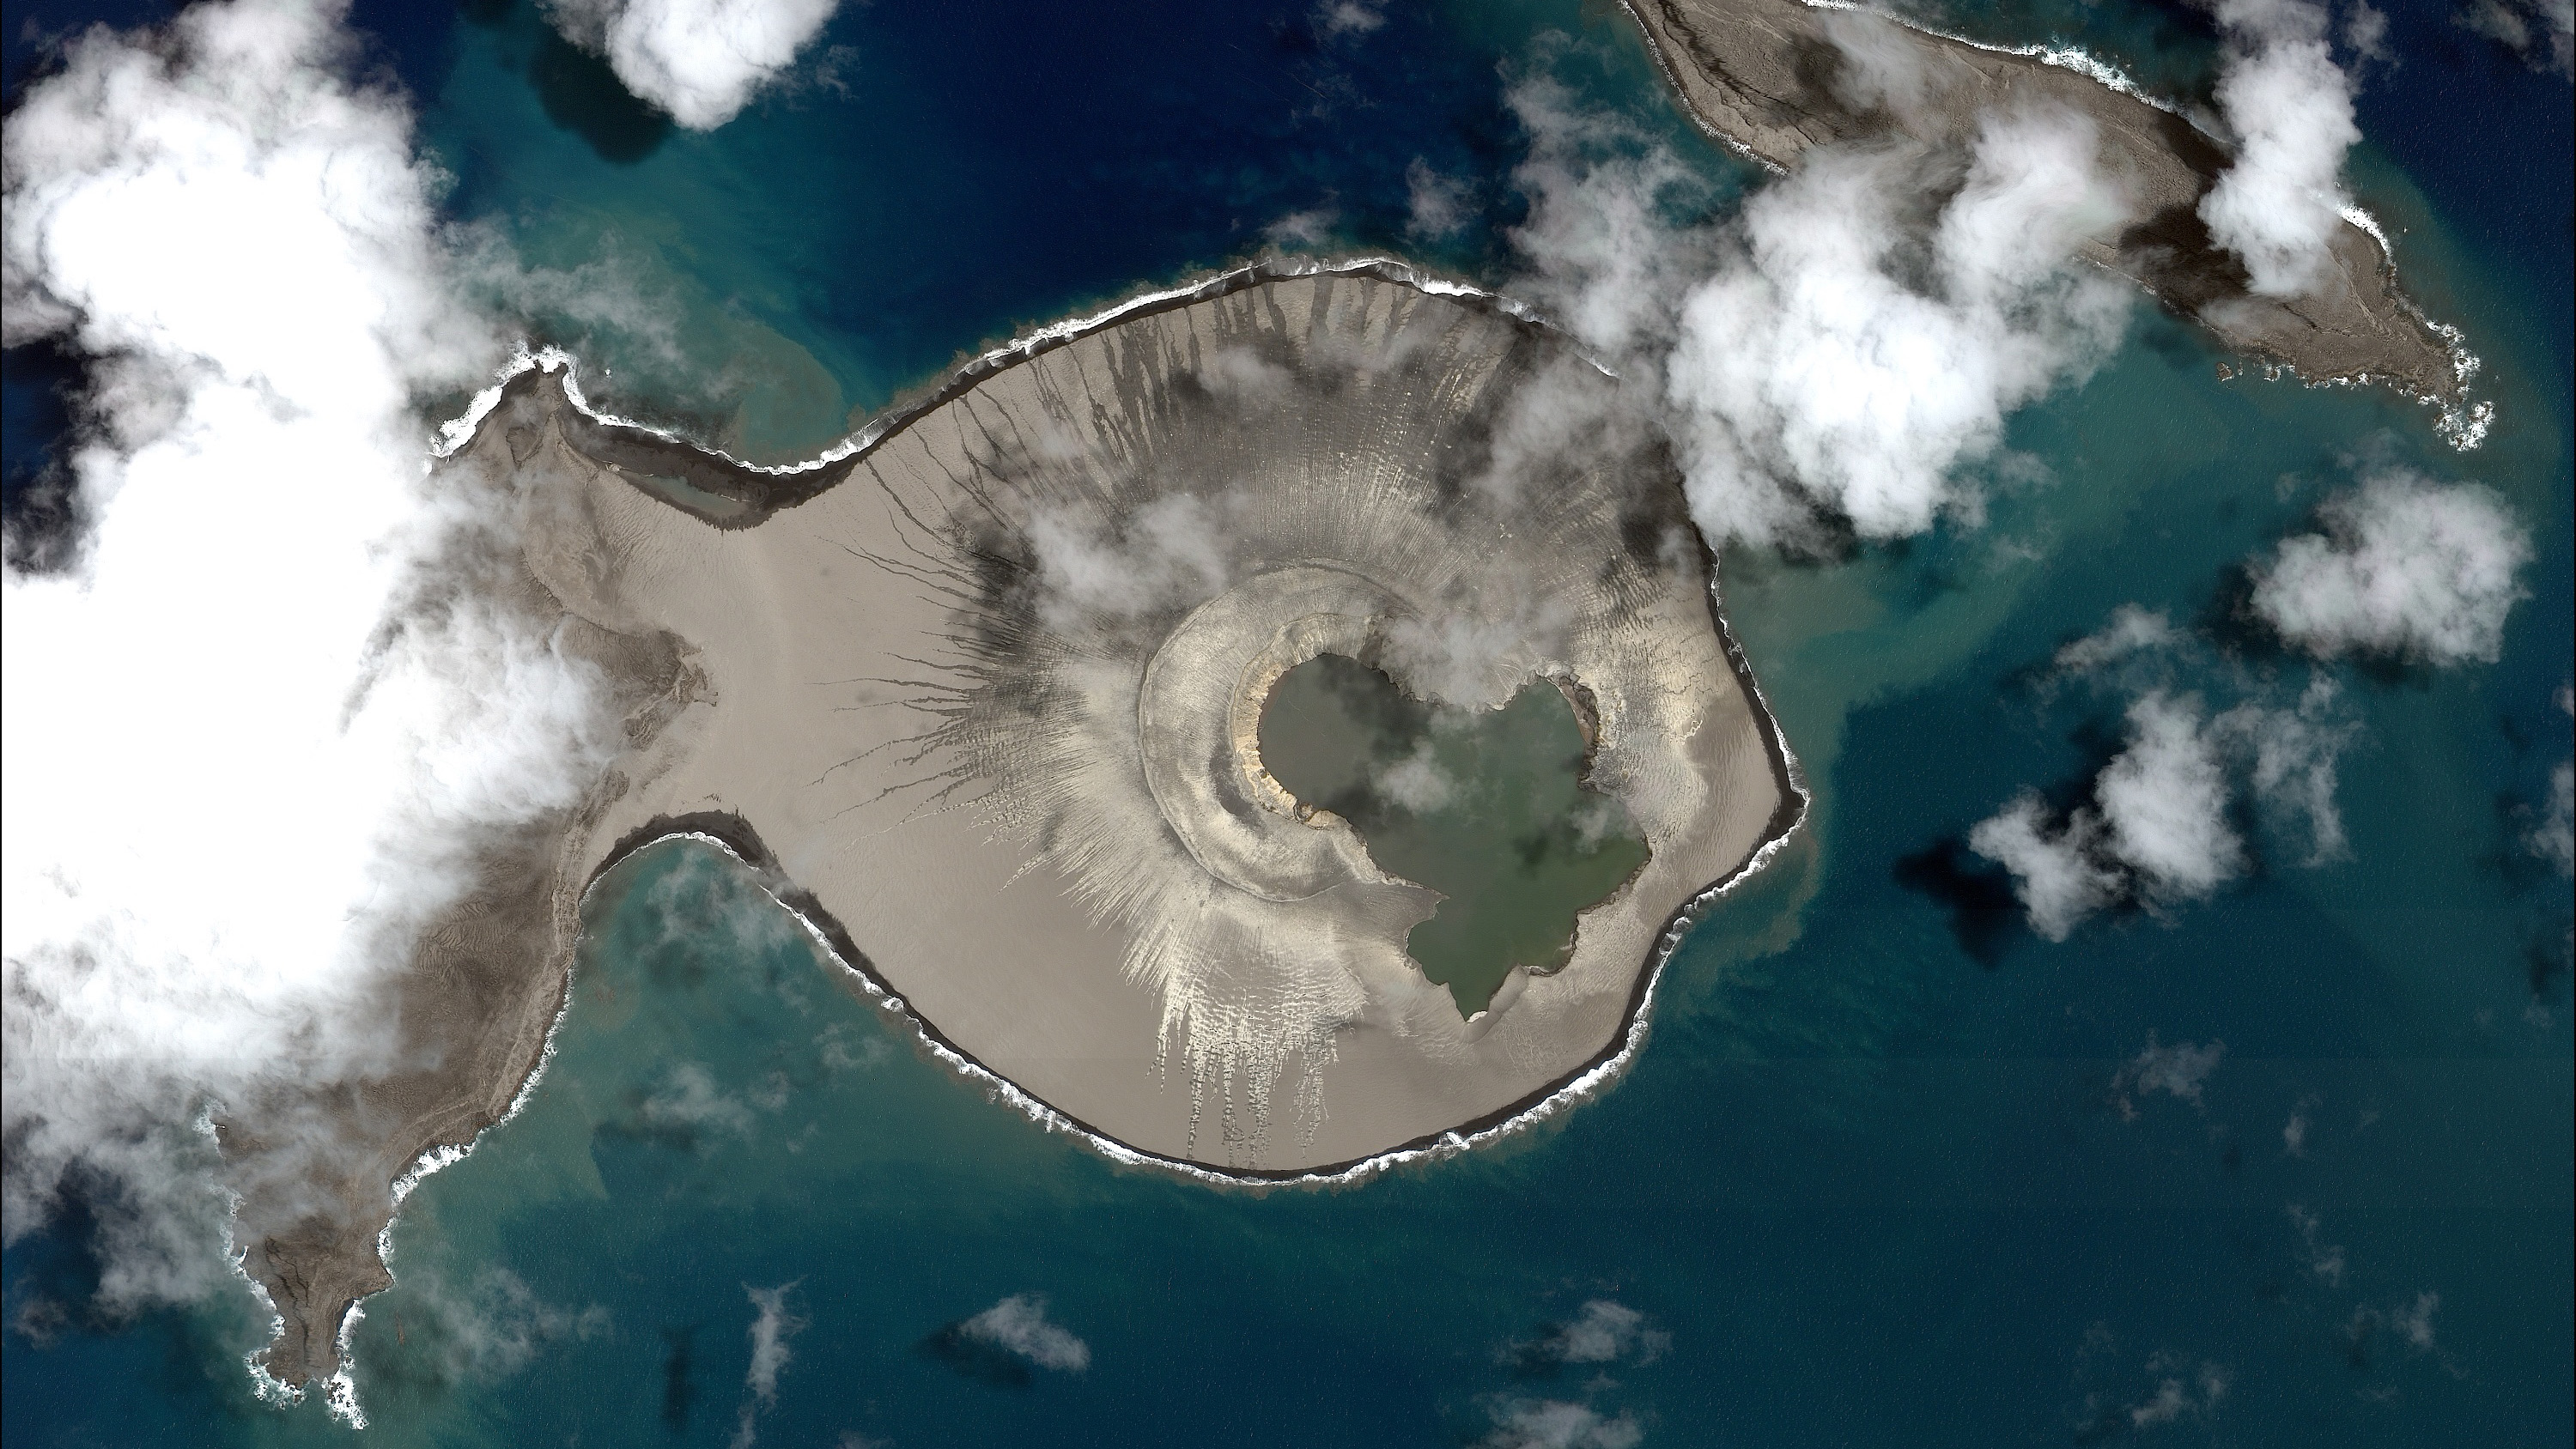 Hunga Tonga-Hunga Ha'apai Image Credit: NASA's Scientific Visualization Studio